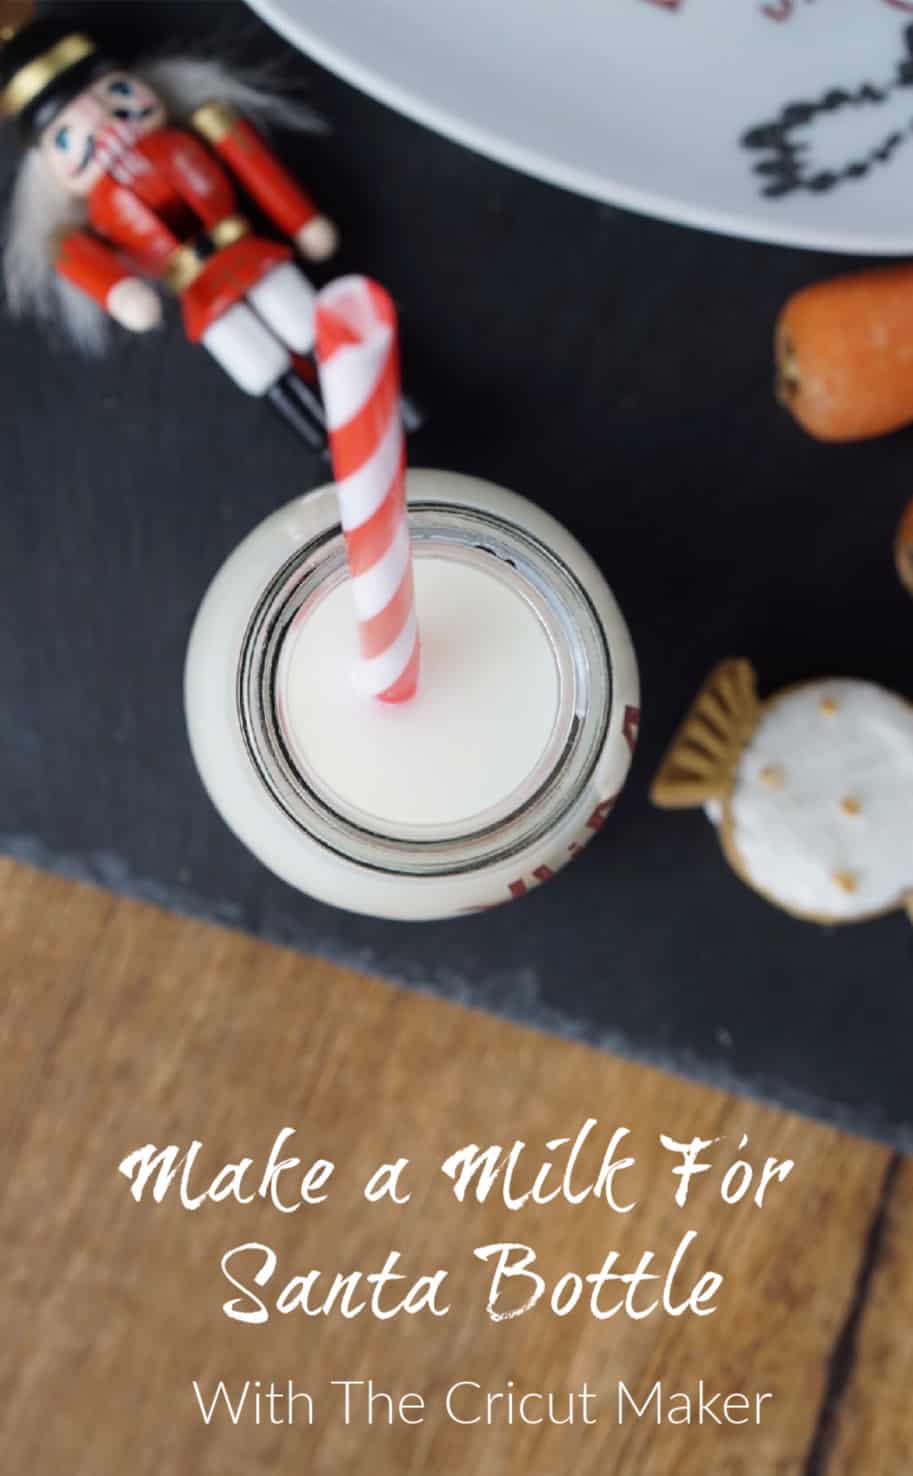 Make a milk for Santa bottle with the Cricut Maker and vinyl